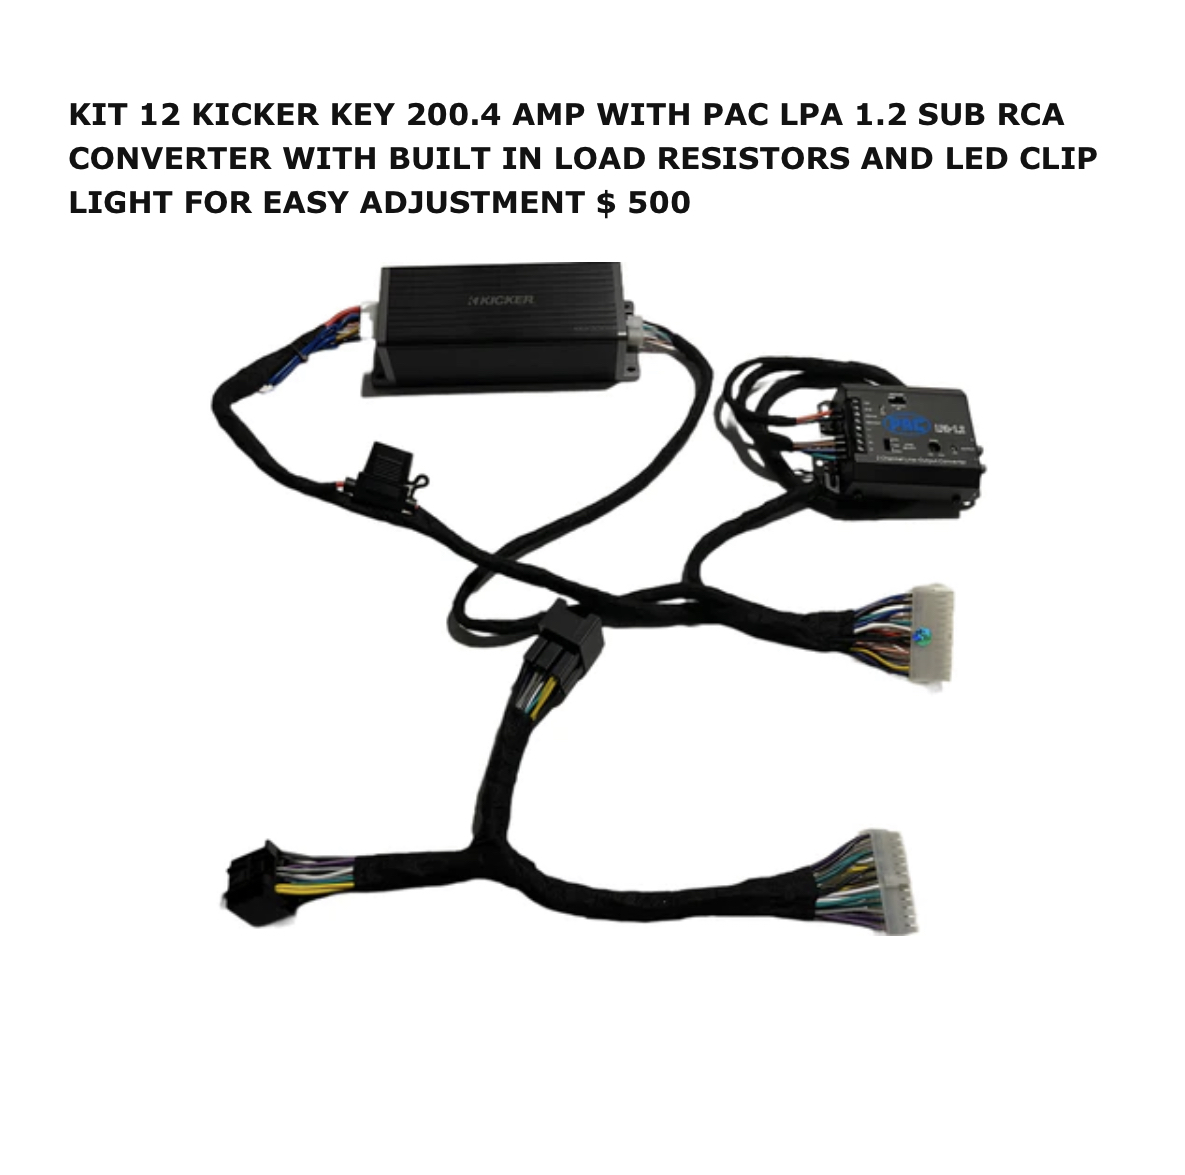 Ford Bronco Kicker Key kit 12 $400 plus shipping 8098FE0F-4ACF-49A0-A02D-5ED9A7AA6B7F